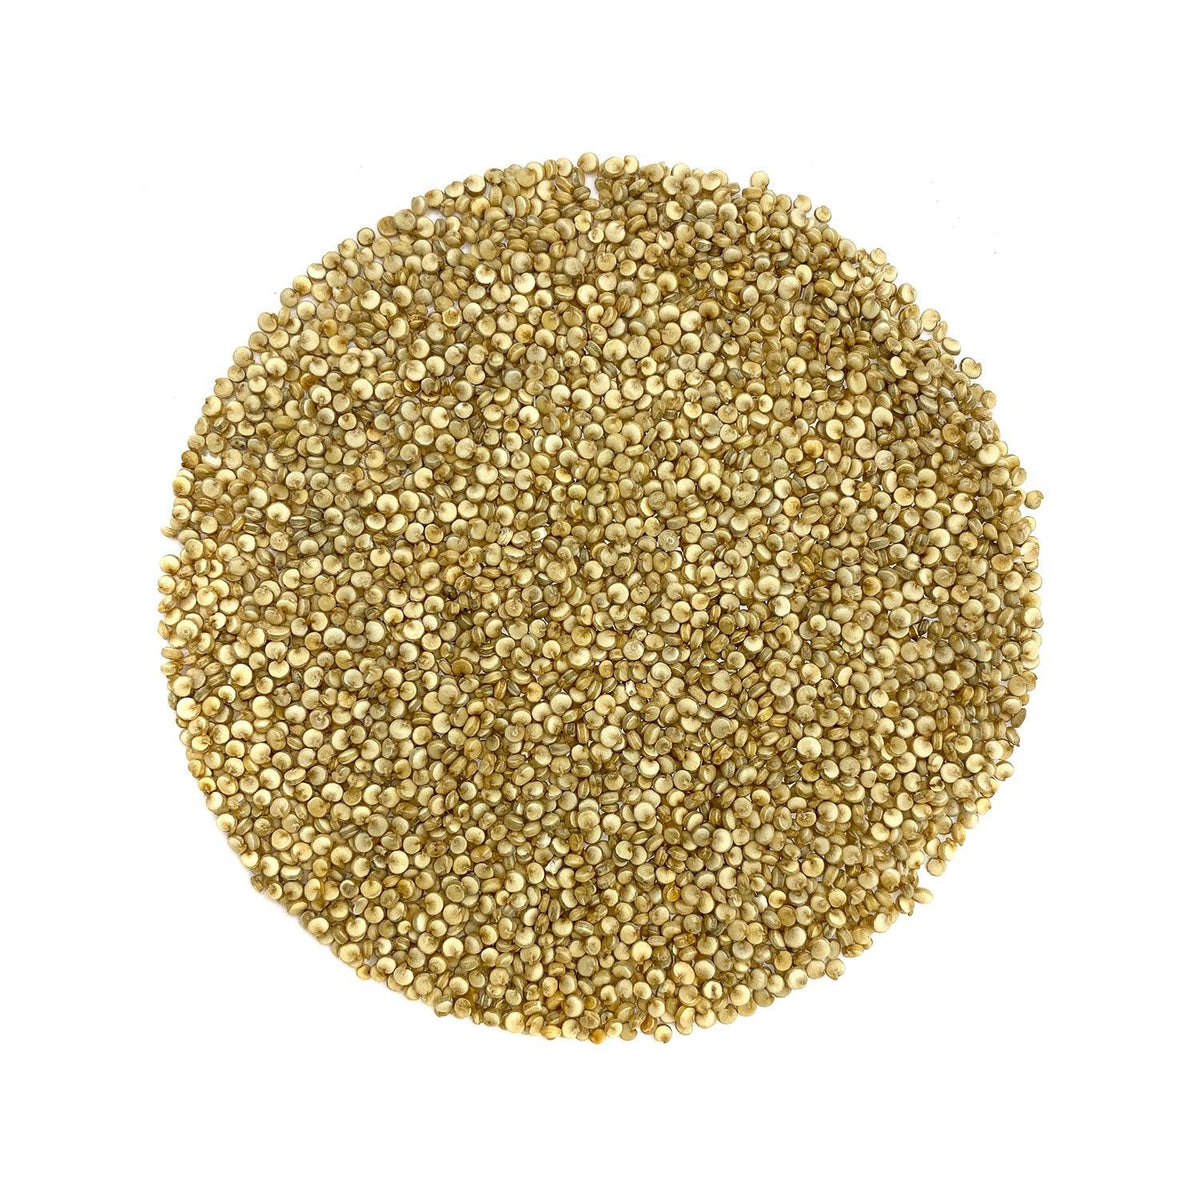 Quinoa White - Organic & Wholesome 800g-Saponin free - Premium Quality Unrefined Grains without Preservatives - Satopradhan